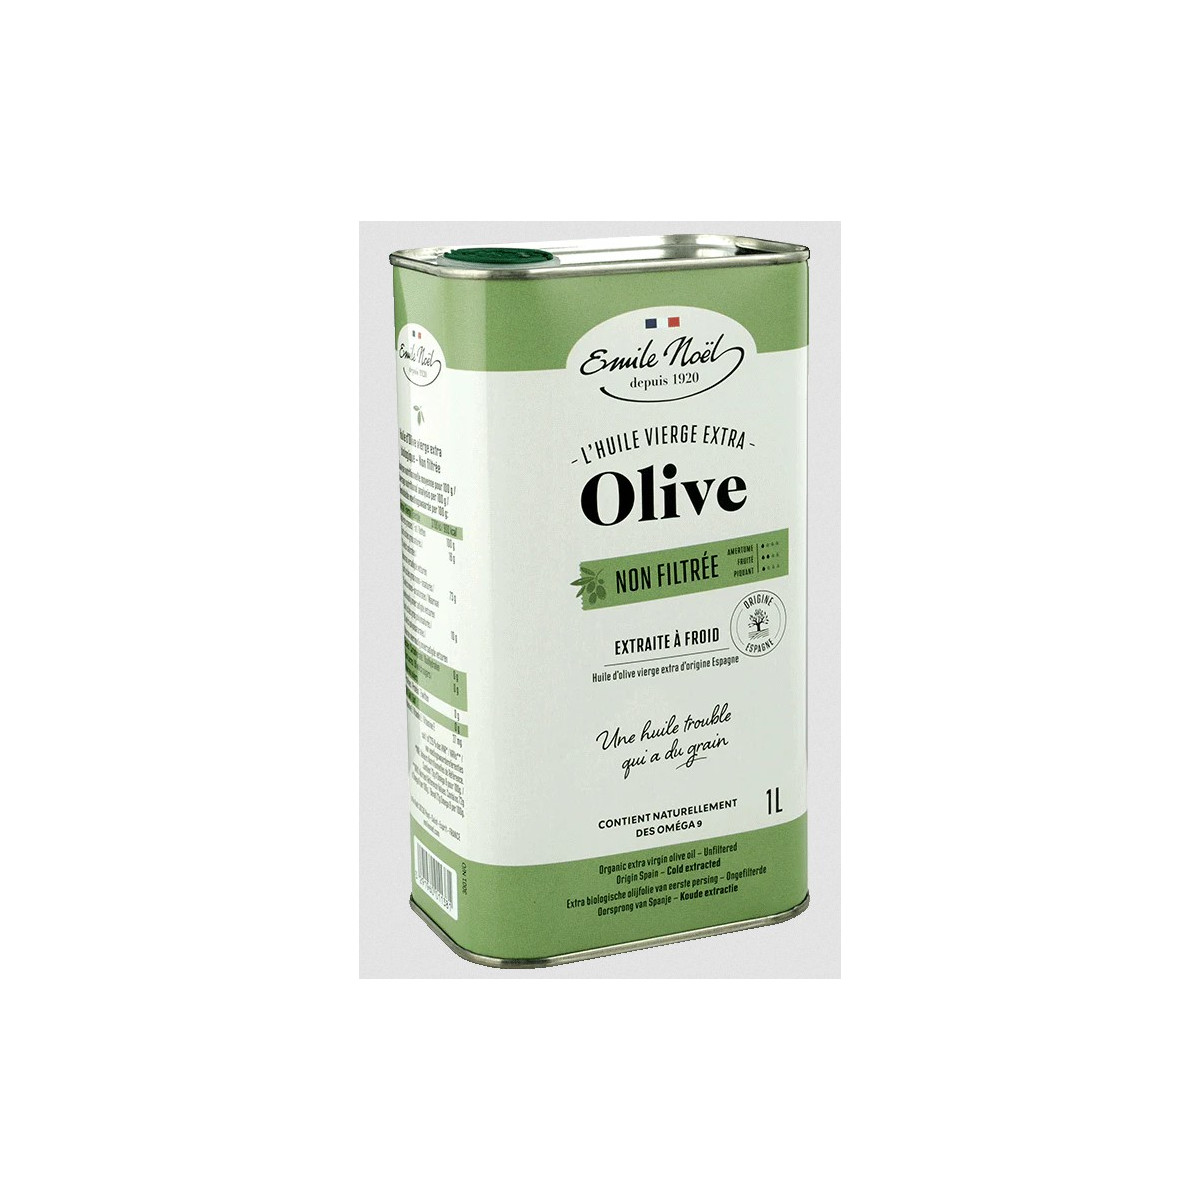 Huile d'Olive Extra Vierge 1L Elibio